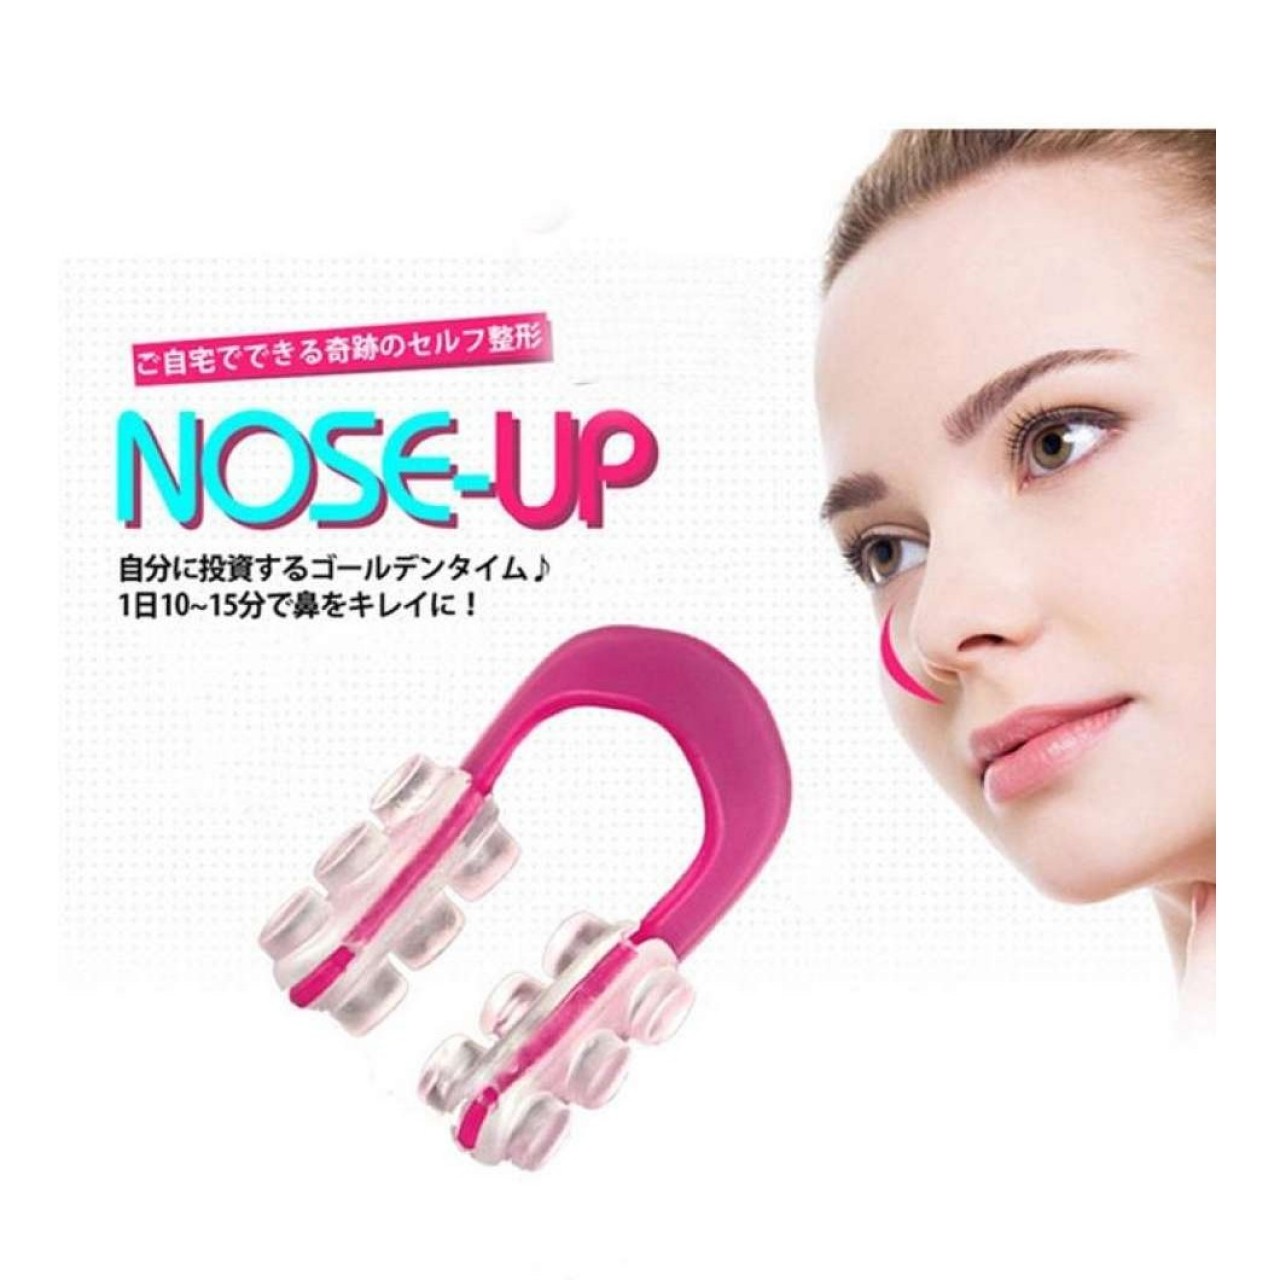 Beauty Nose Shaper Clip - Pink